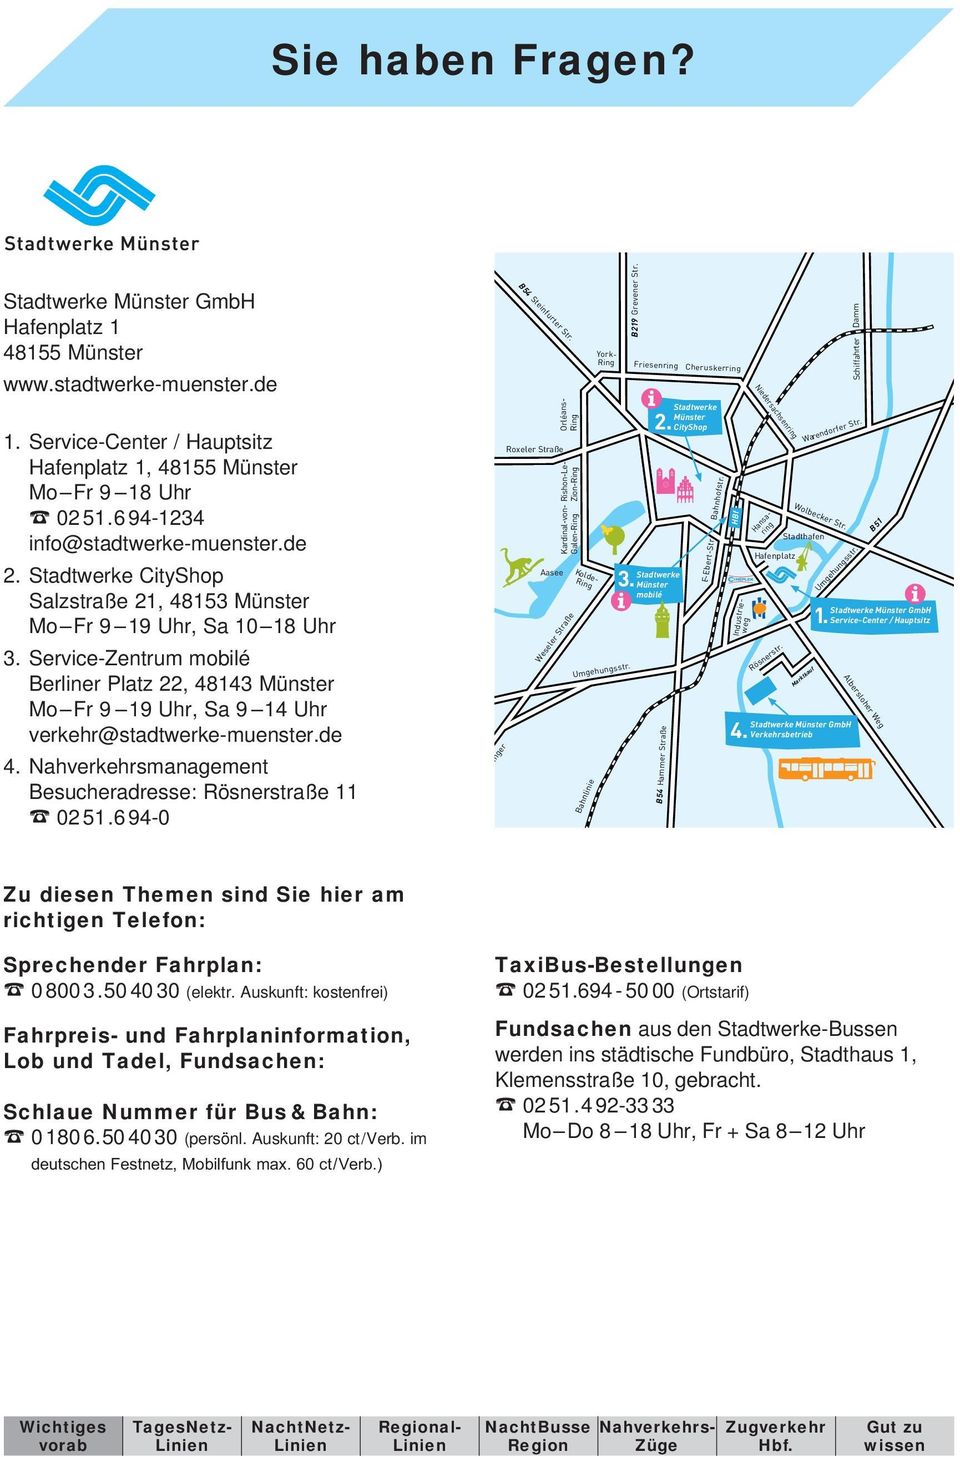 Service-Zentrum mobilé Berliner Platz 22, 48143 Münster Mo Fr 9 19 Uhr, Sa 9 14 Uhr verkehr@stadtwerke-muenster.de 4. Nahverkehrsmanagement Besucheradresse: Rösnerstraße 11 02 51.